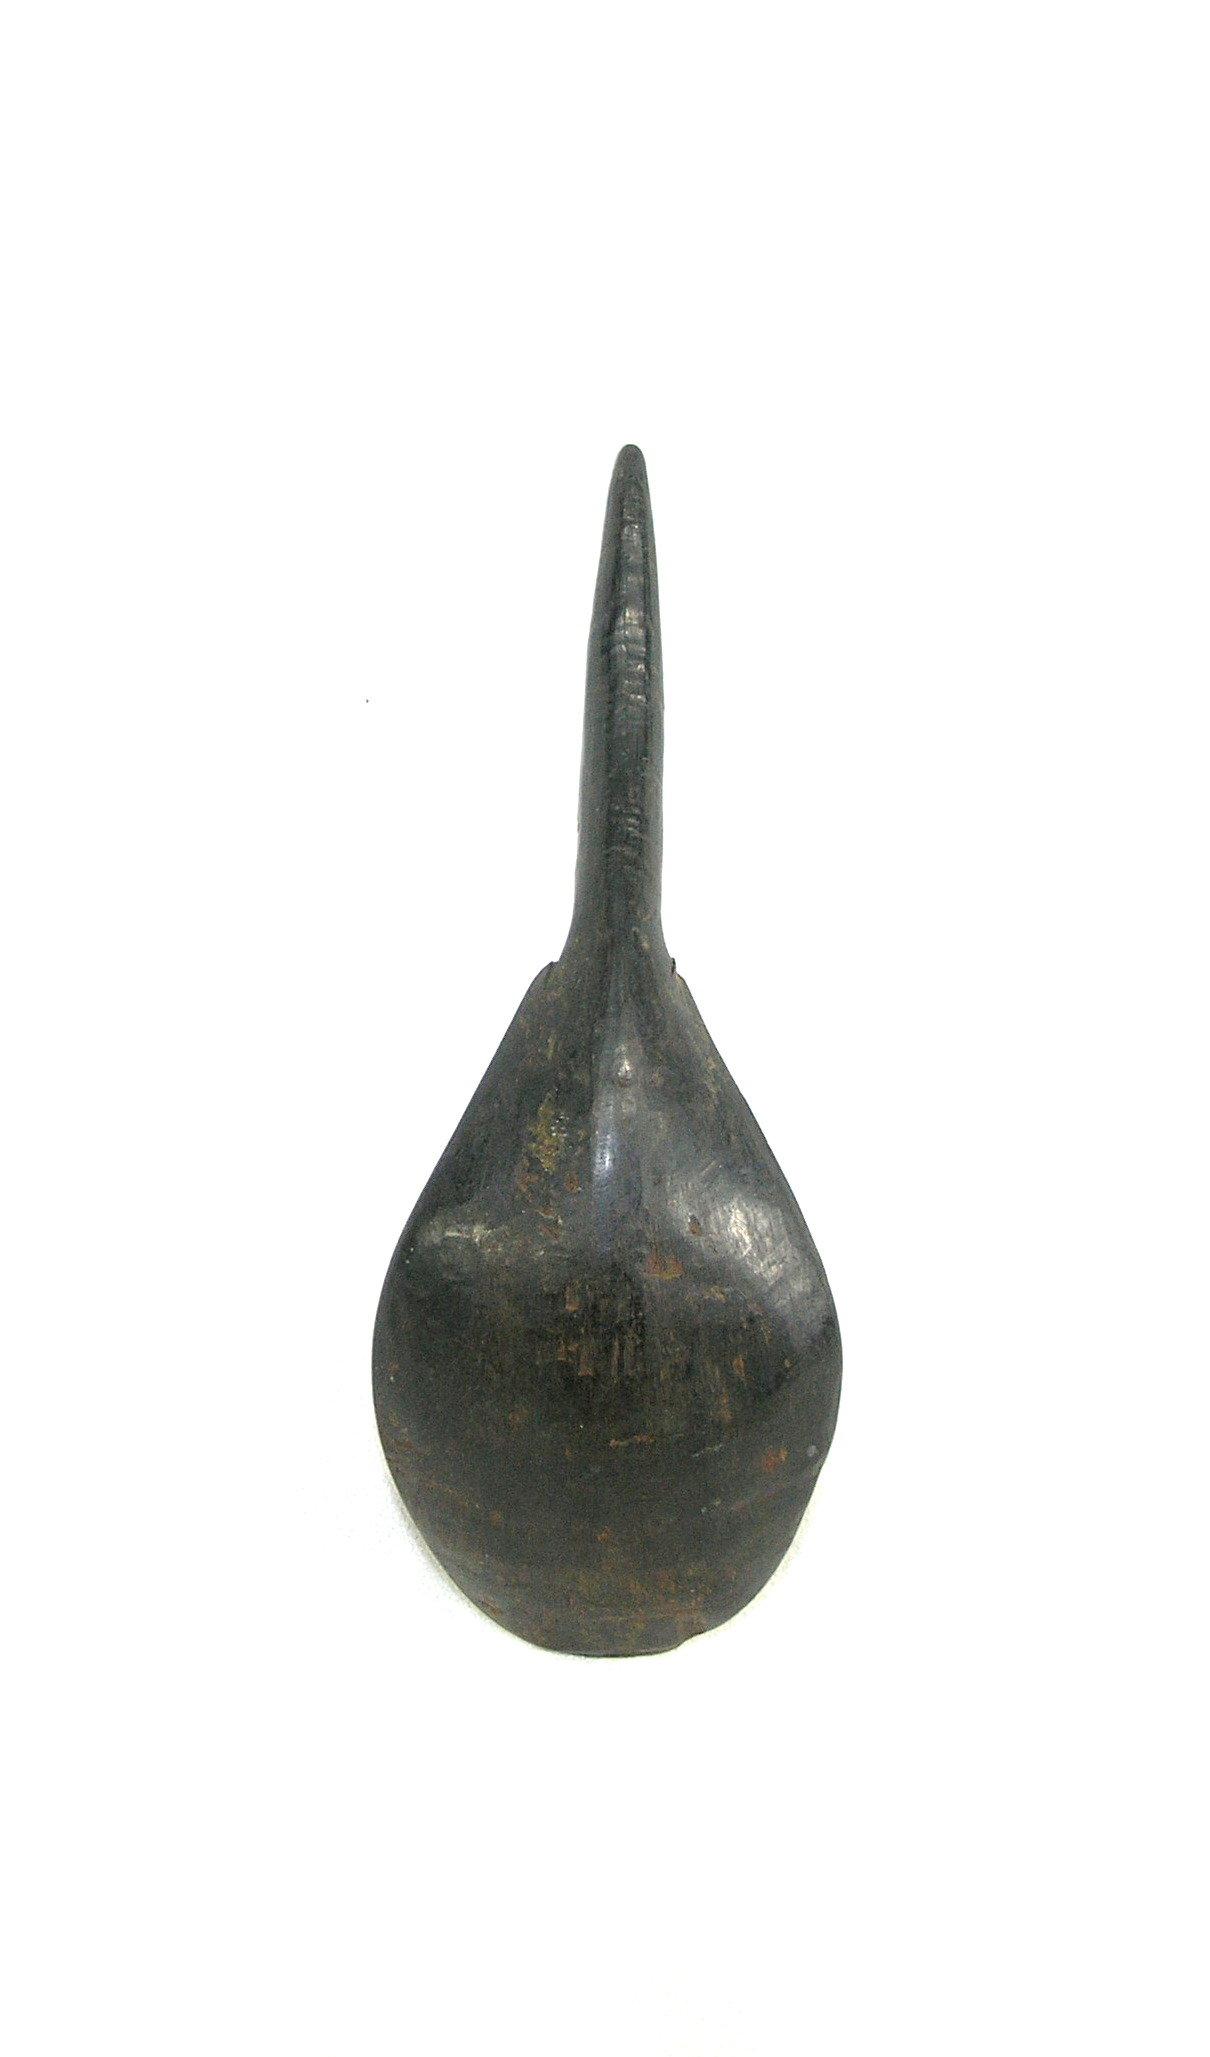 Vintage American Indian Black Wooden Carved Spoon.  6-1/2"